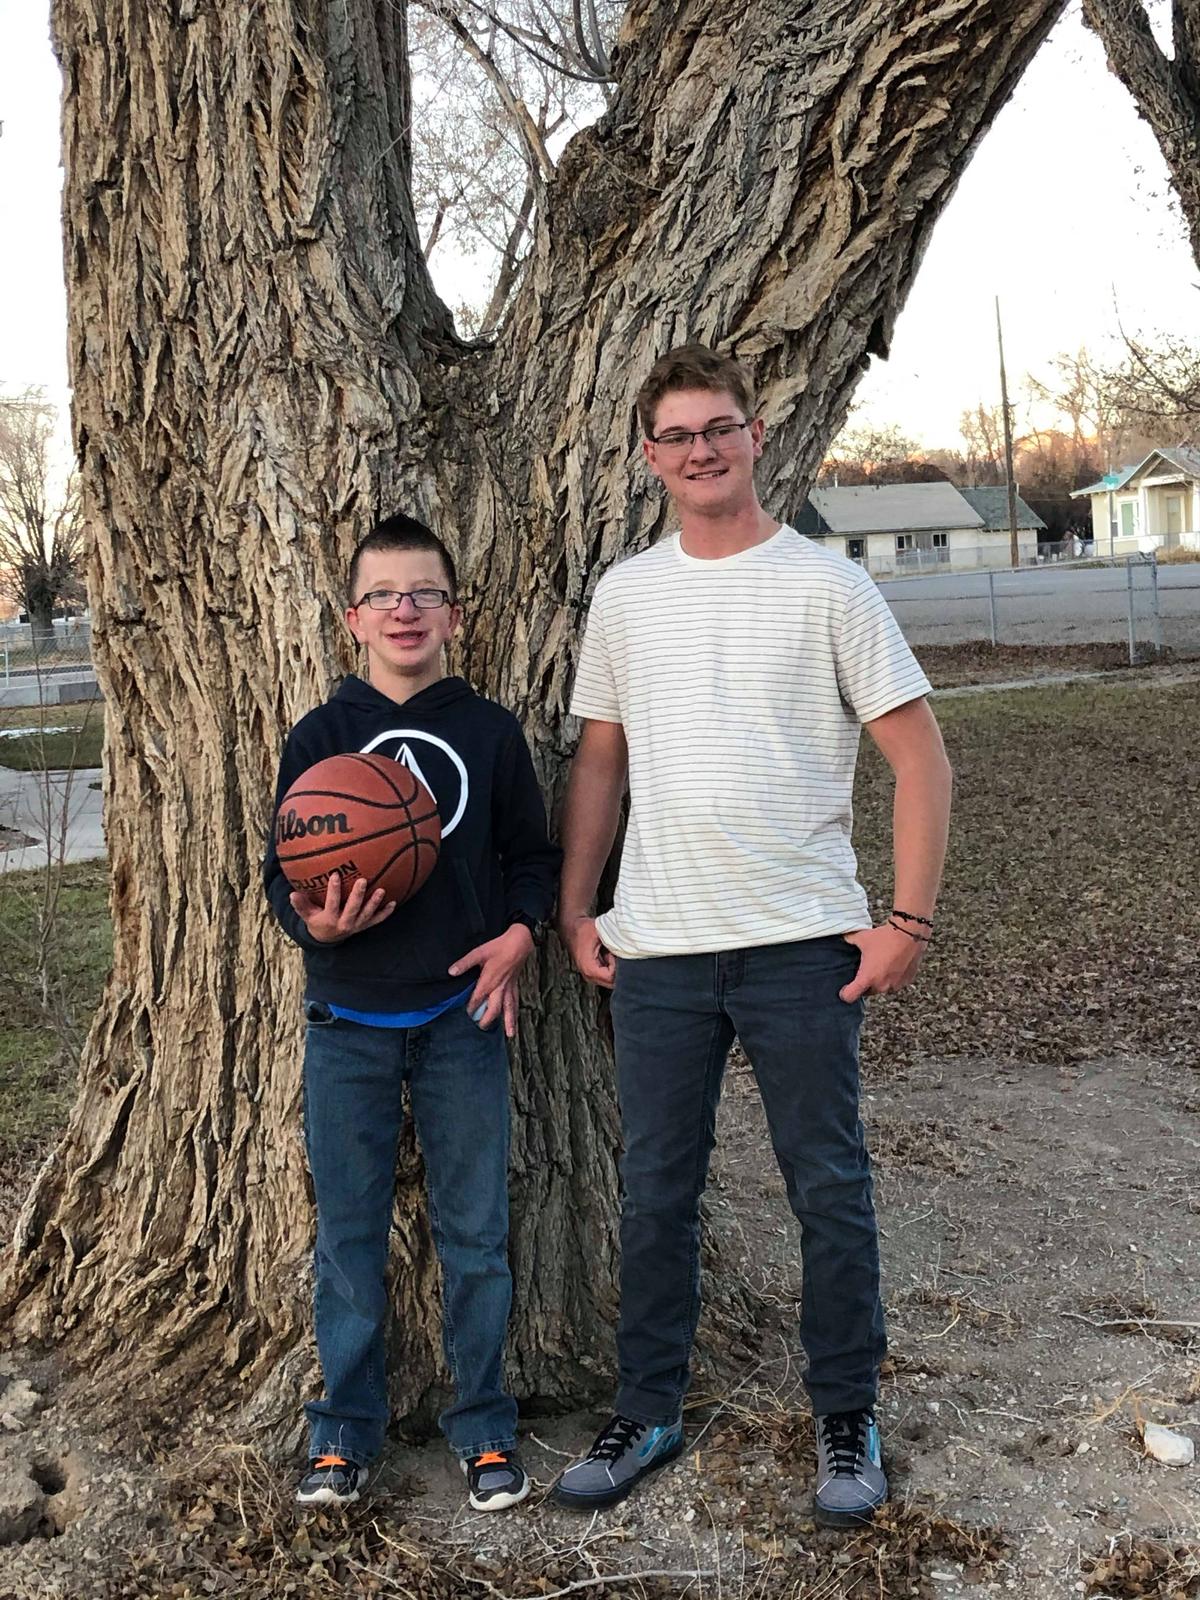 Basketball enthusiasts Tanner Hendrix and Skyler Carter. (Courtesy of <a href="https://www.facebook.com/meghanchendrix/">Meghan Hendrix</a>)